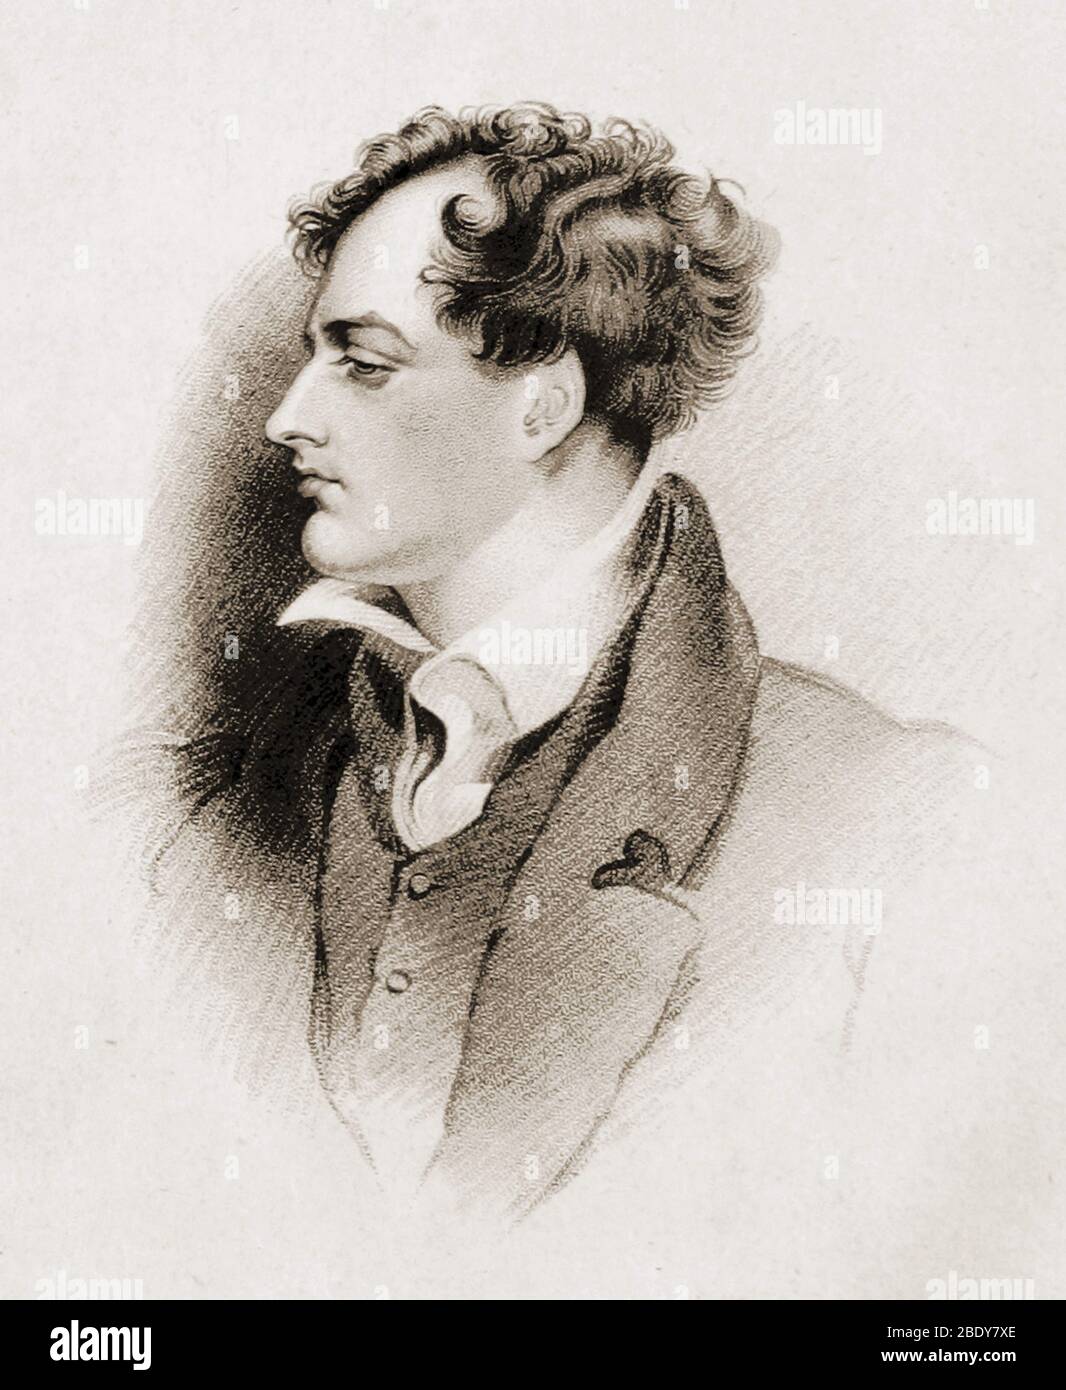 Lord Byron, poeta romantico inglese Foto Stock